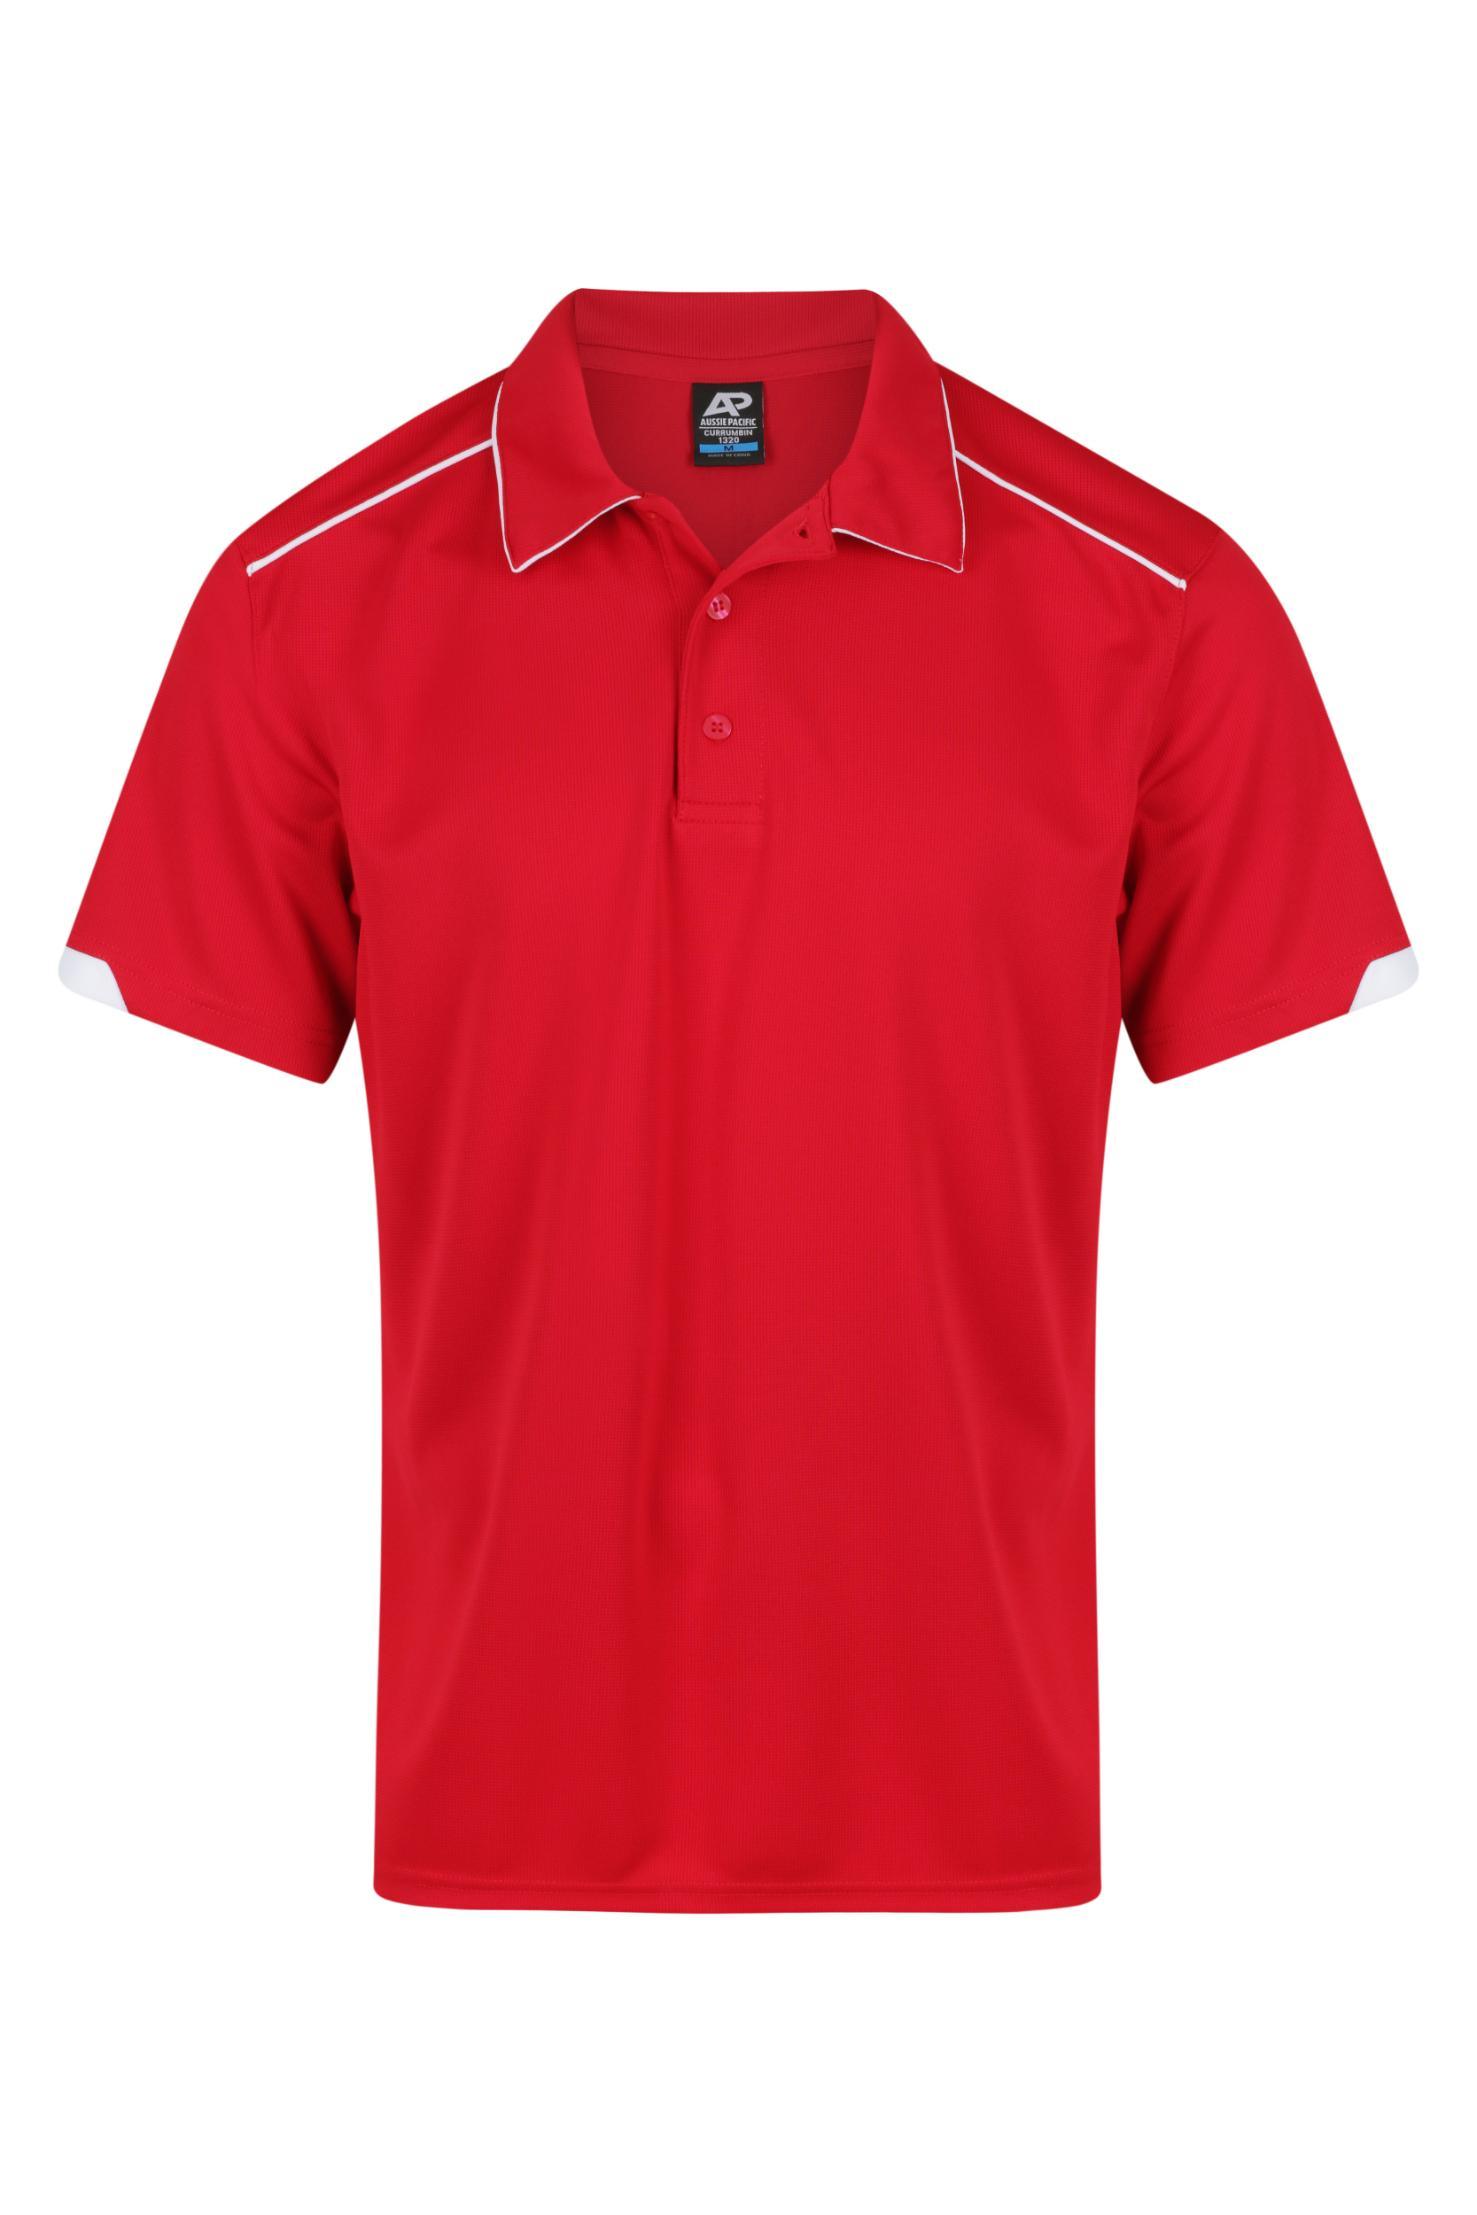 Currumbin Workwear Polo Shirts - Red/White